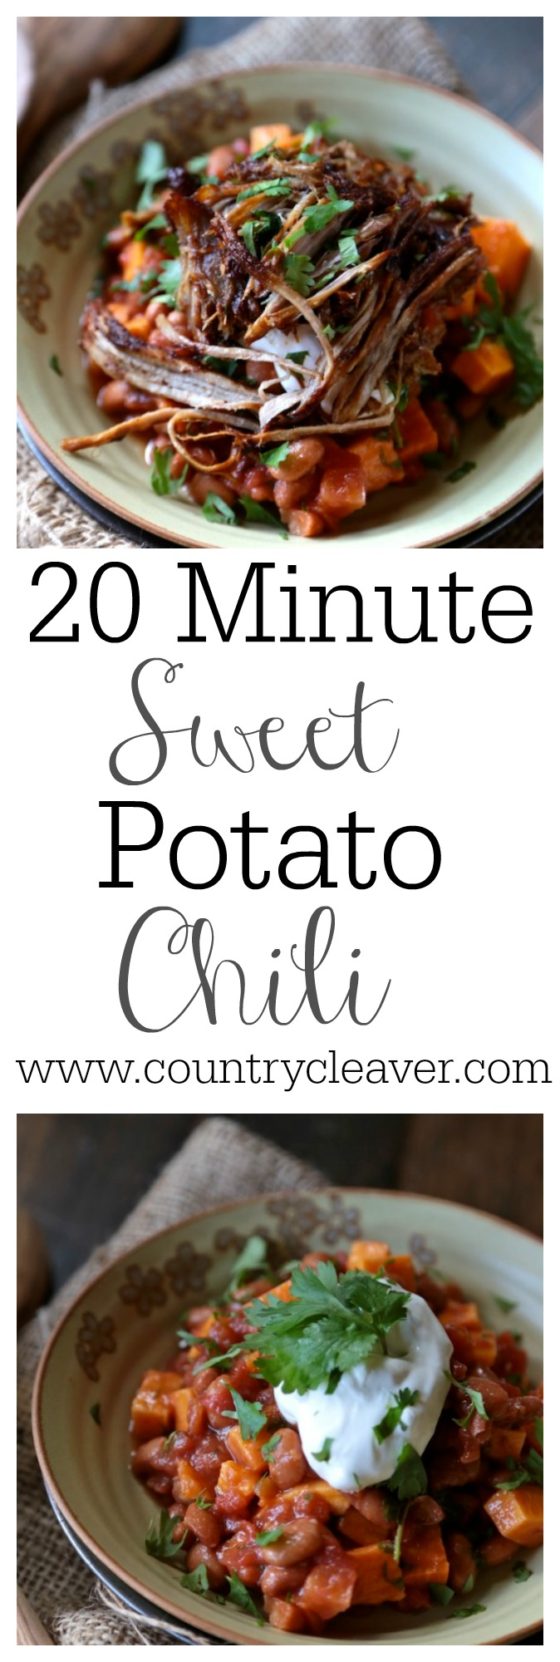 20 Minute Sweet Potato Chili